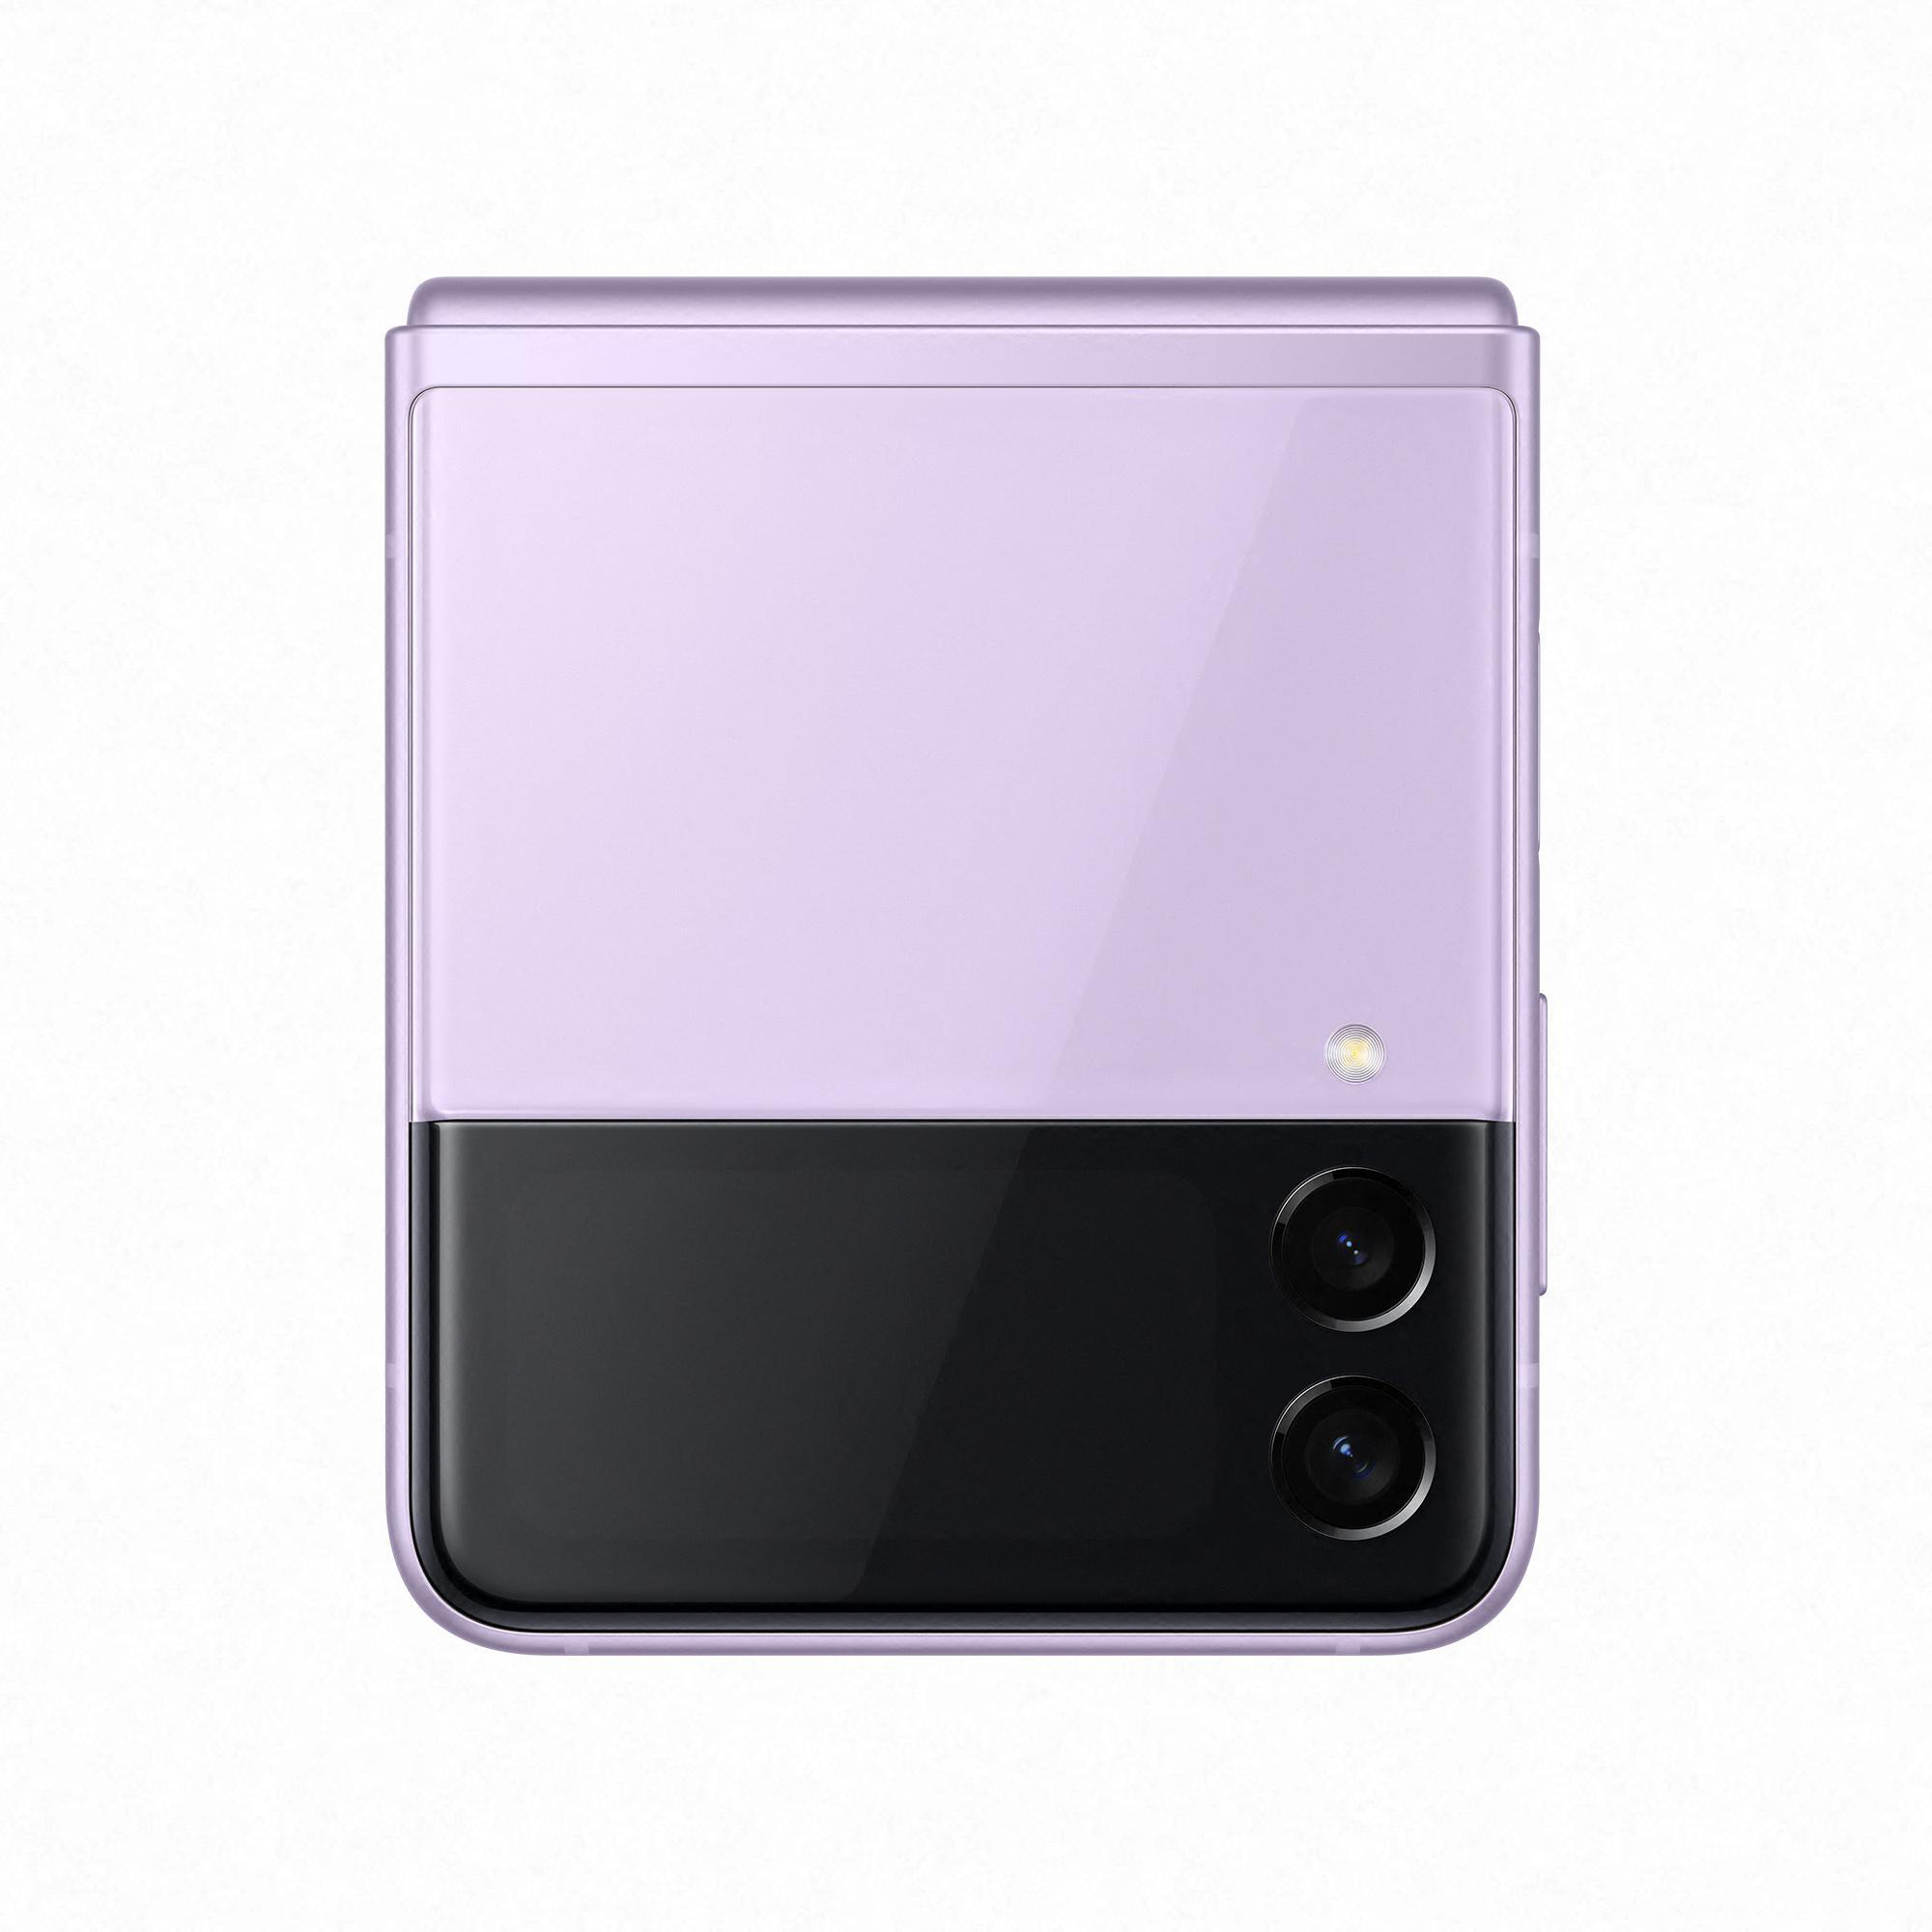 SAMSUNG Galaxy Z Flip3 256 Lavender 5G SIM Phantom Dual GB